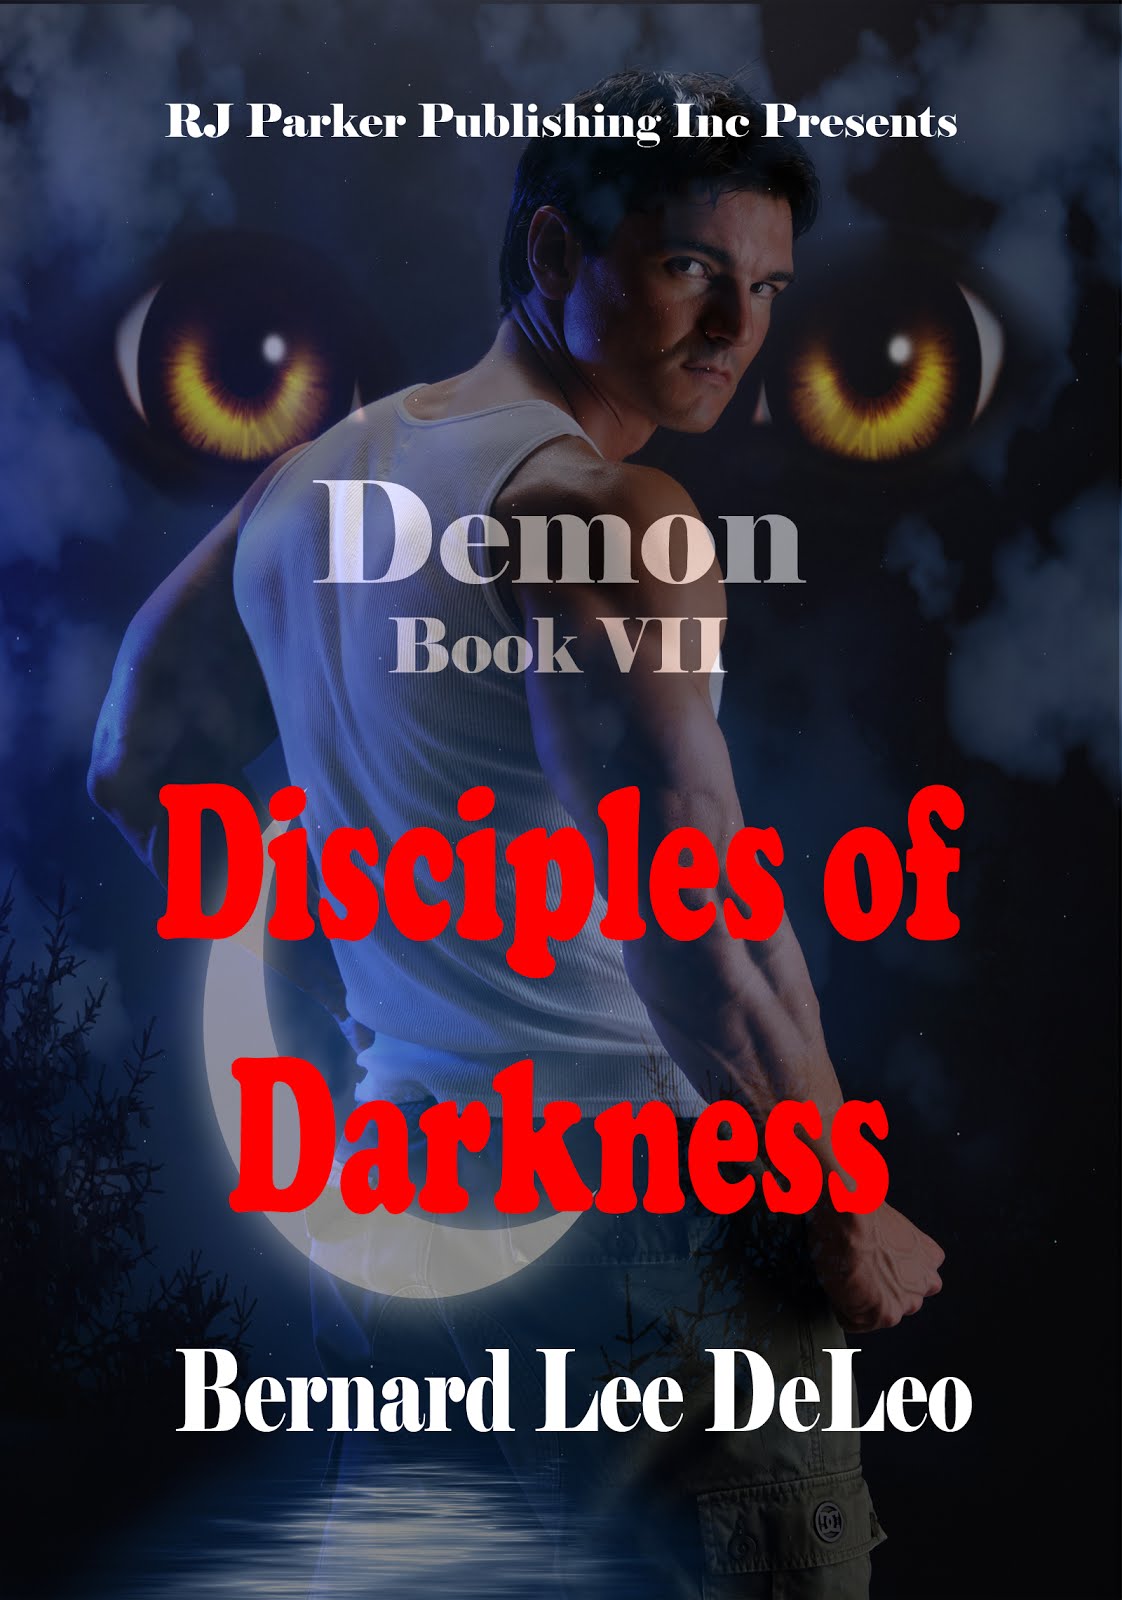 Demon Book VII: Disciples of Darkness